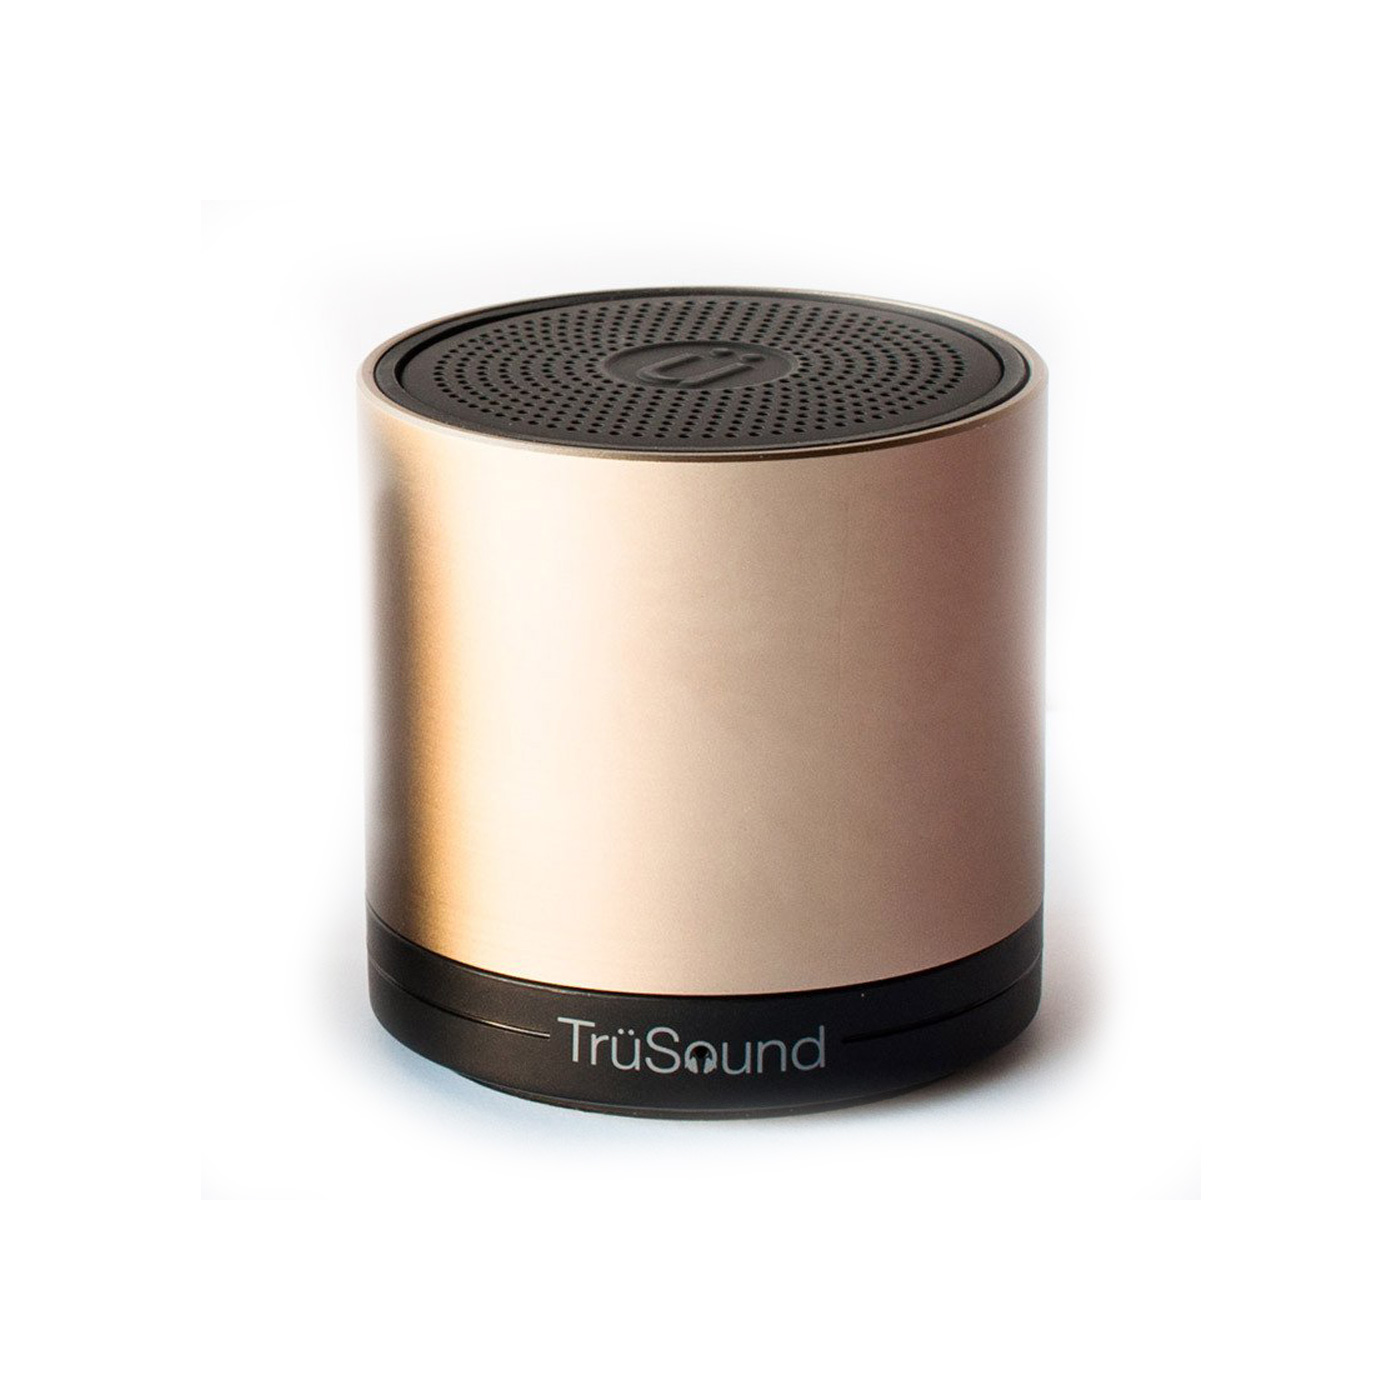 TruSound T2 Portable Bluetooth Speaker with Speakerphone - image 1 of 6